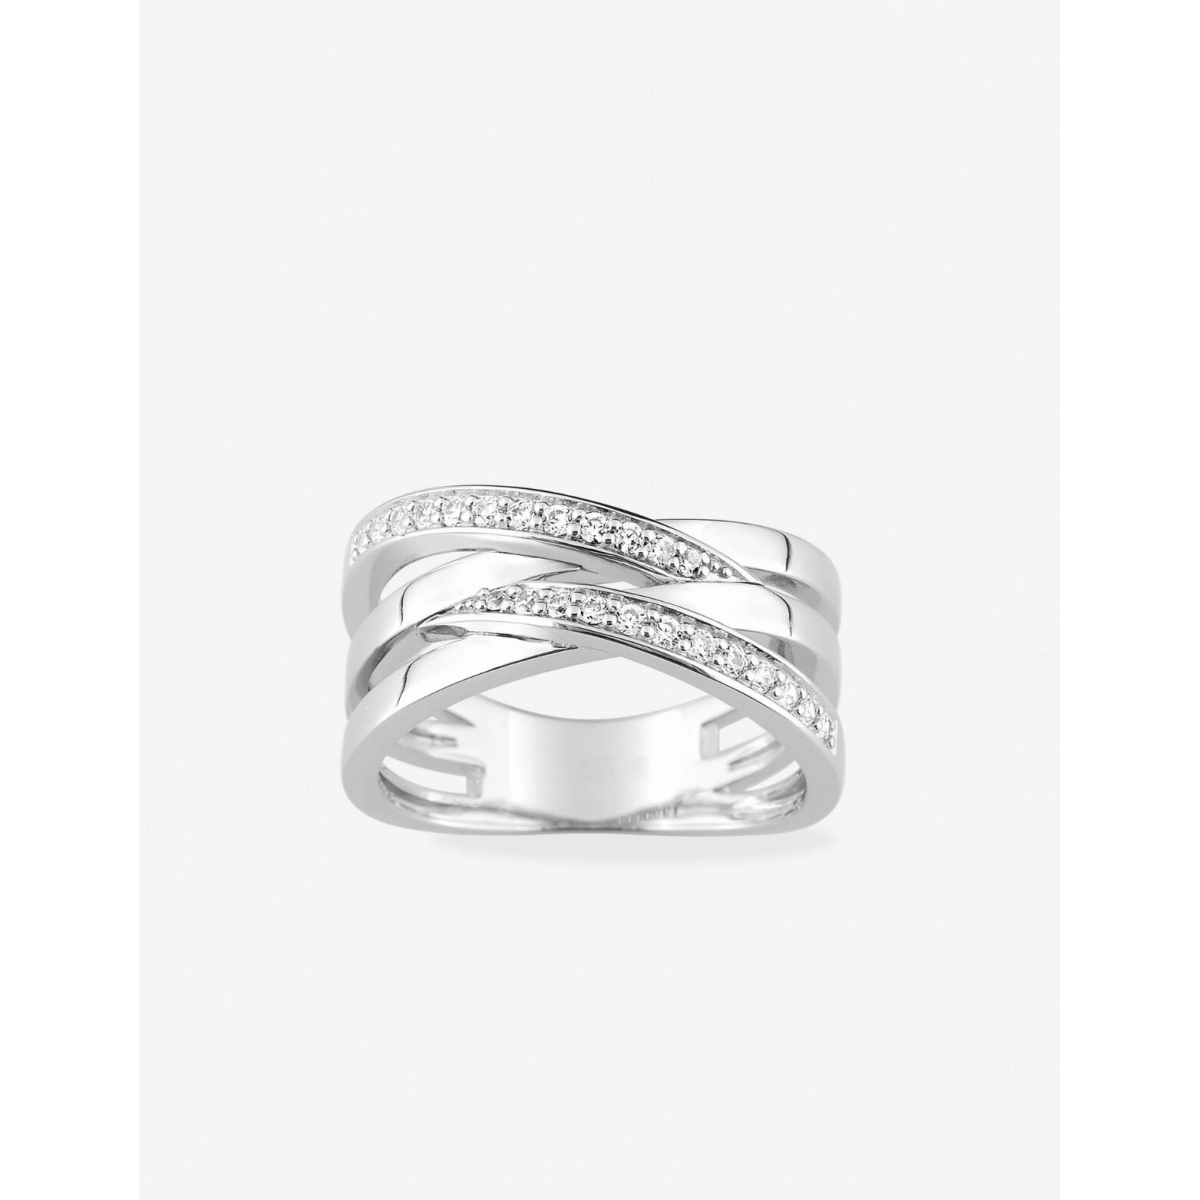 Ring w. cz rh925 Silver Lua Blanca  450155.9 - Size 55